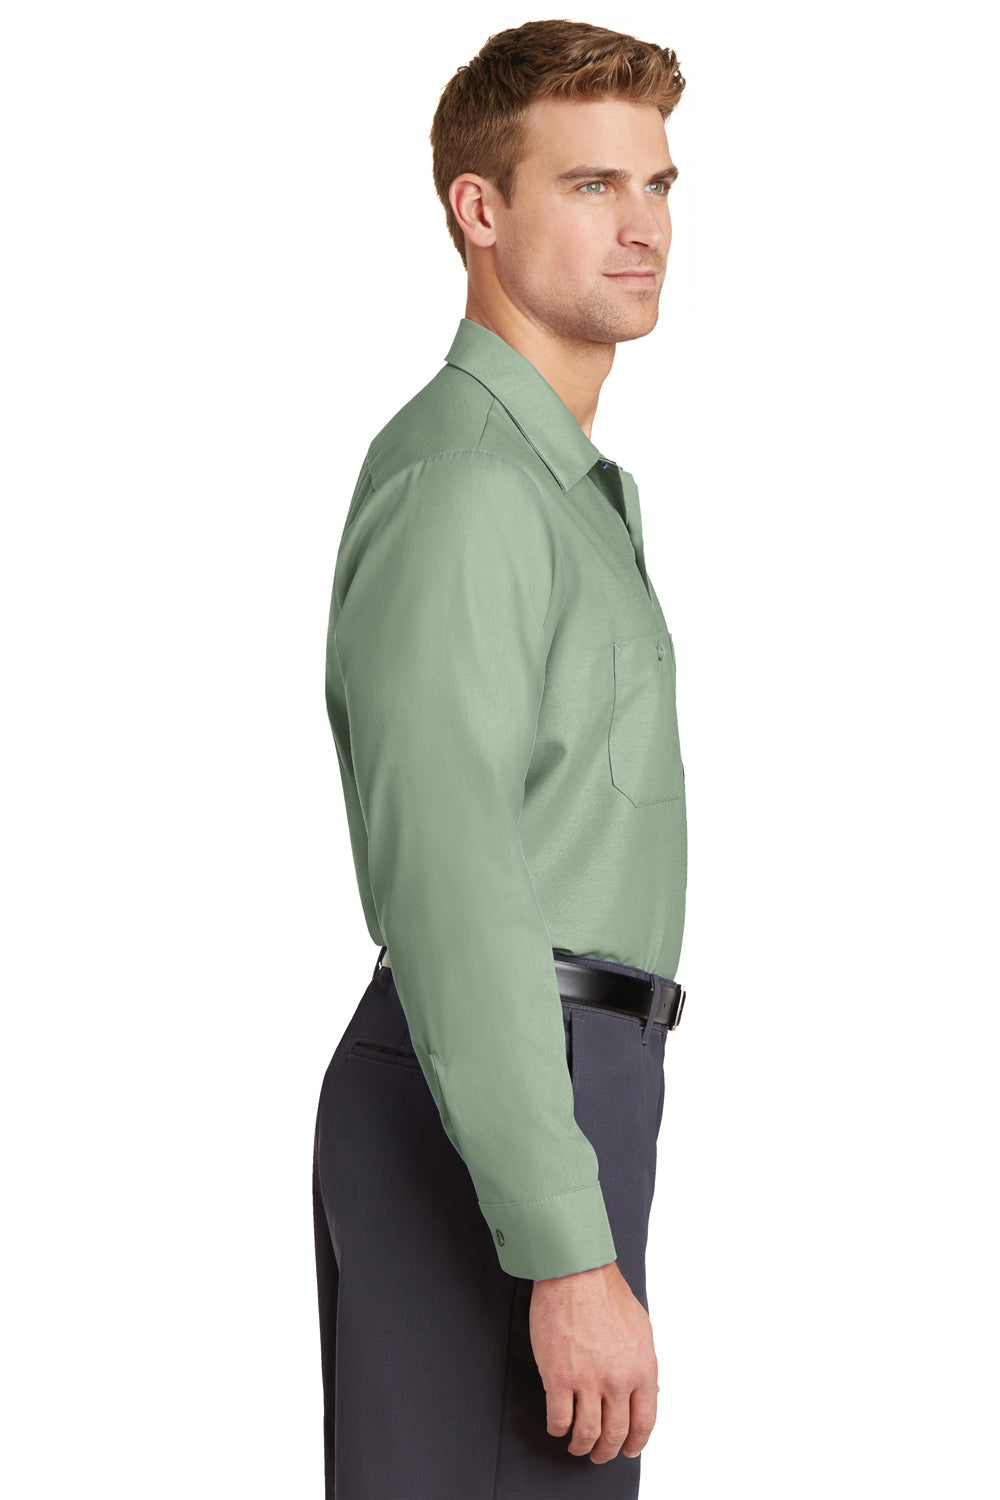 Red Kap SP14 Mens Industrial Moisture Wicking Long Sleeve Button Down Shirt w/ Double Pockets Light Green Side